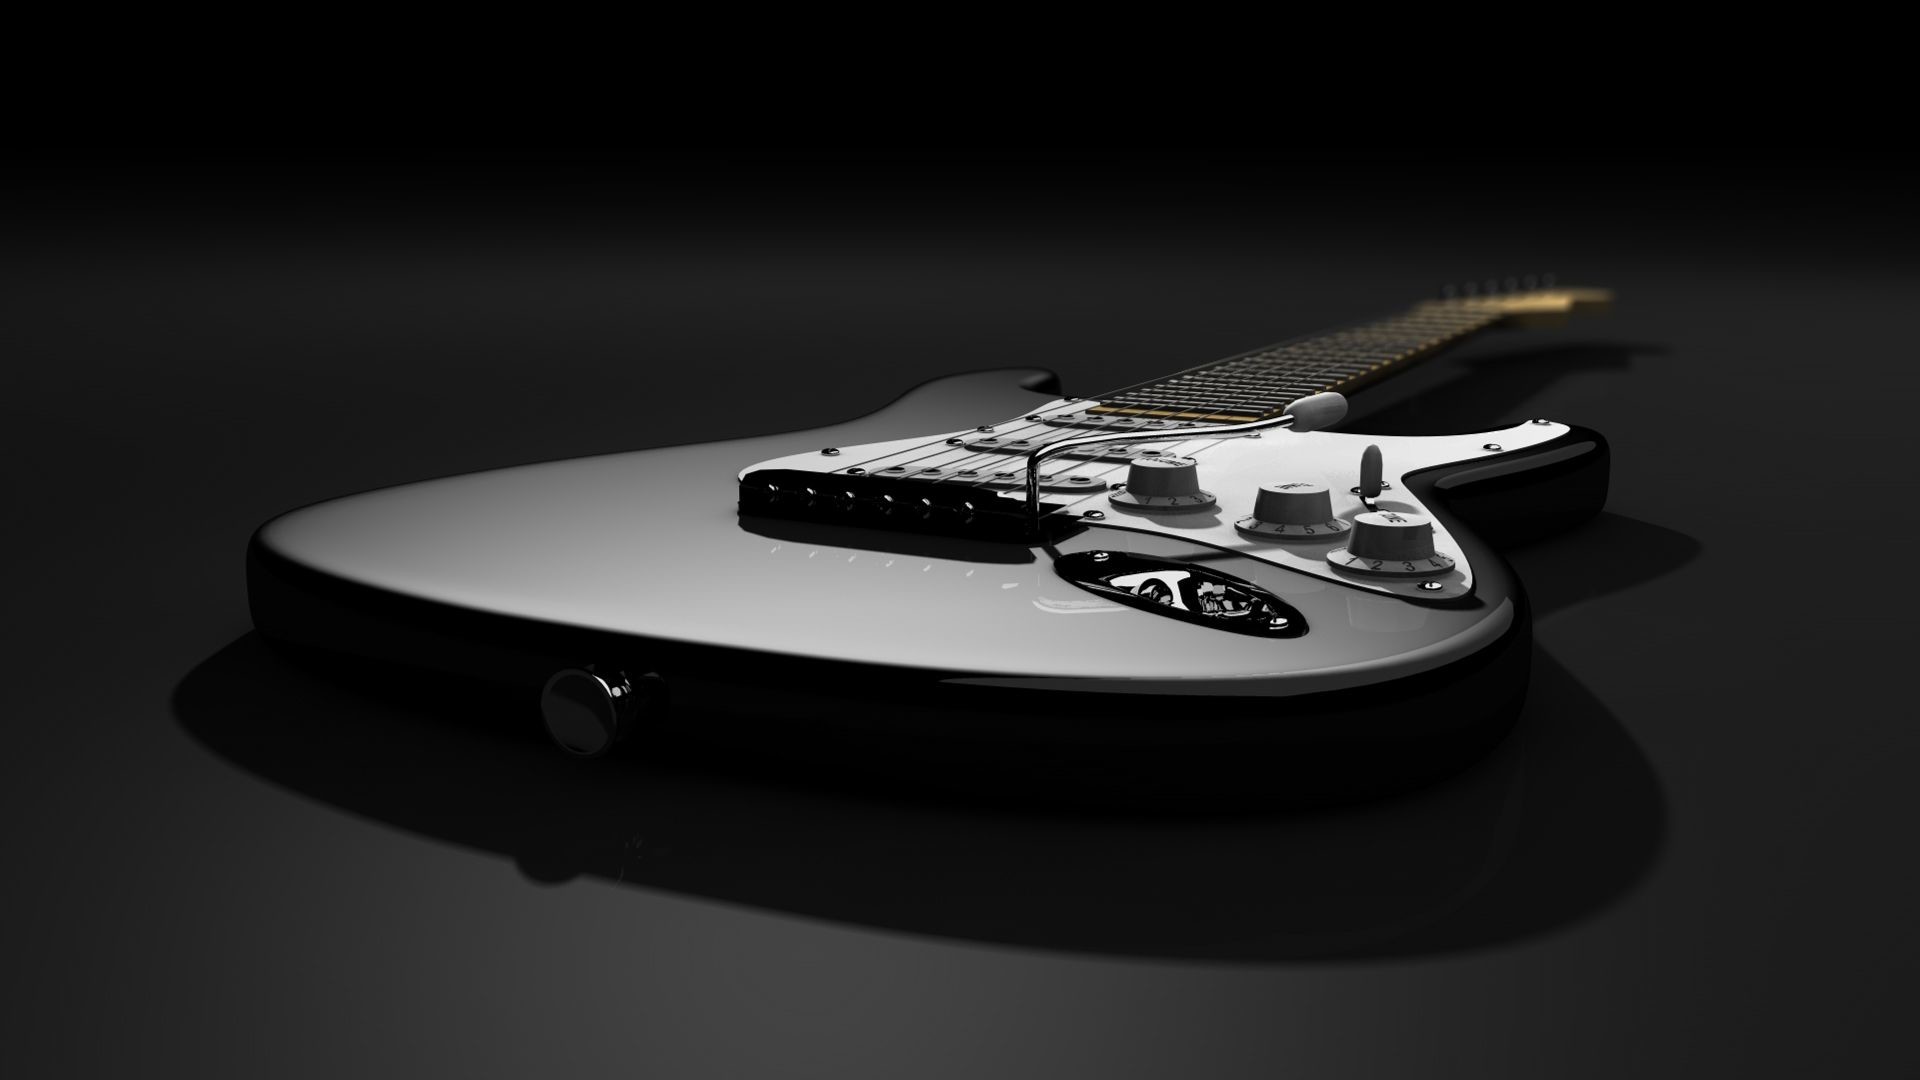 1920x1080 Wallpaper Fender Strat